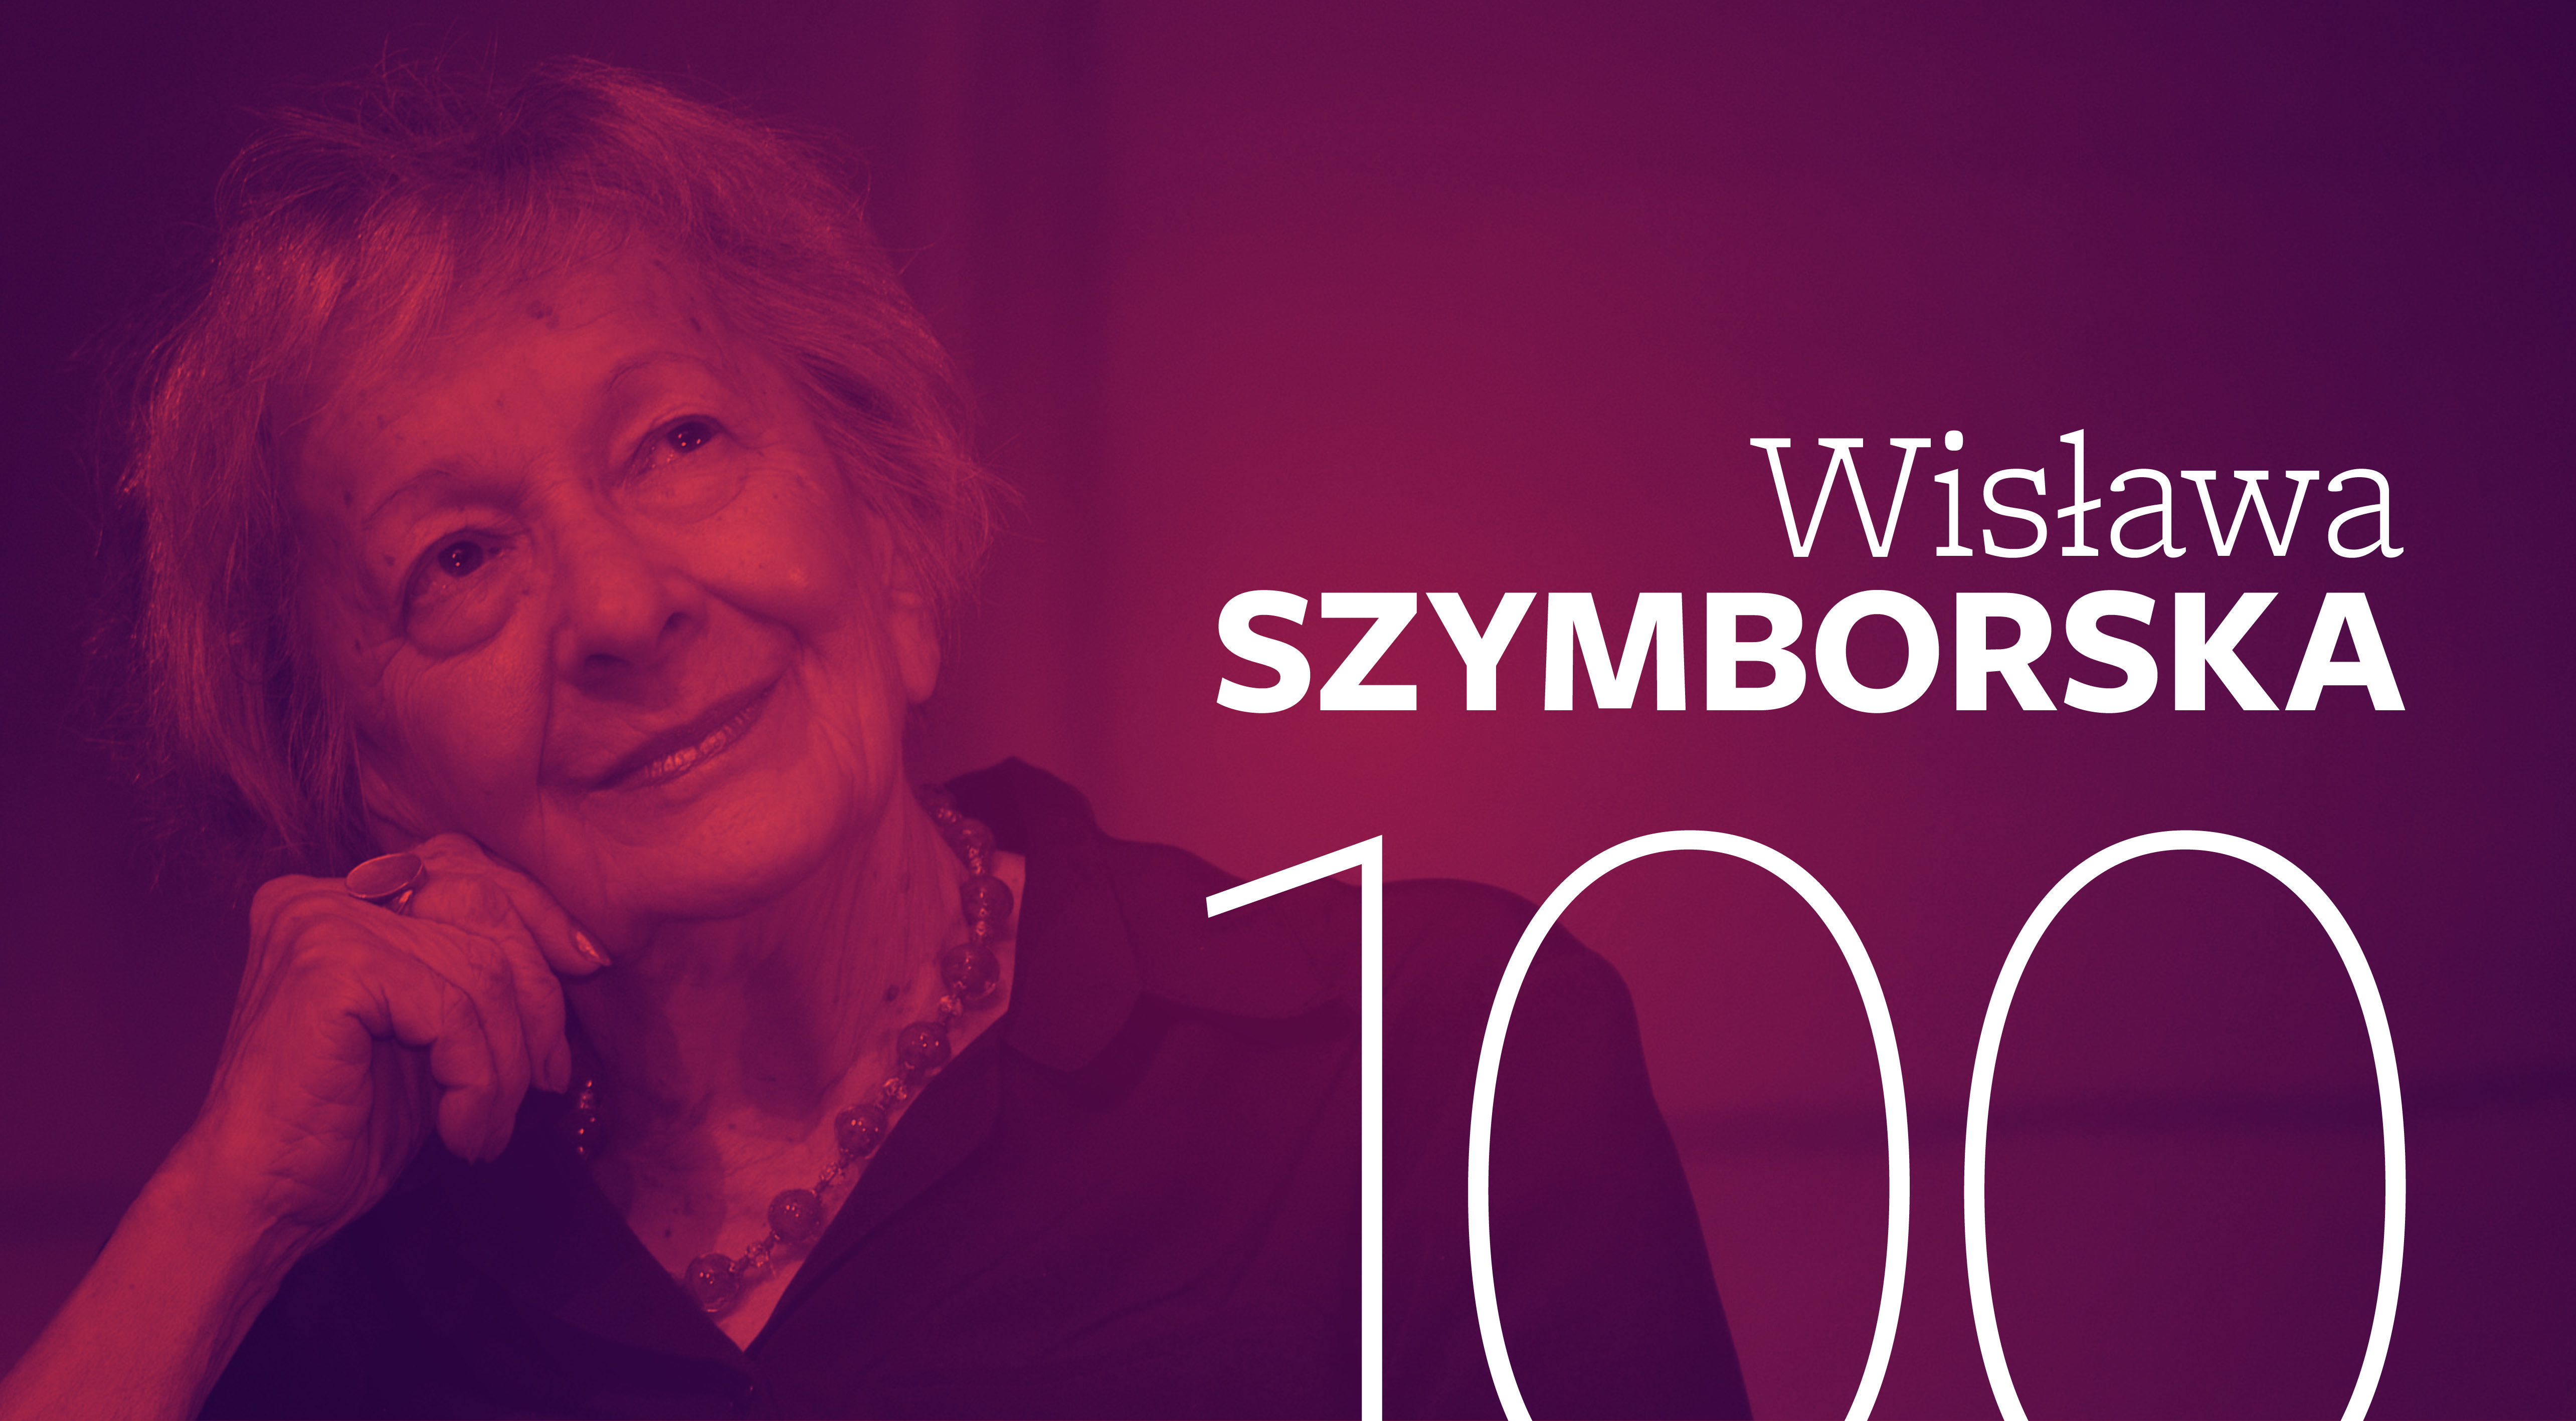 Maradtak kérdőjelek (Wisława Szymborska 100)